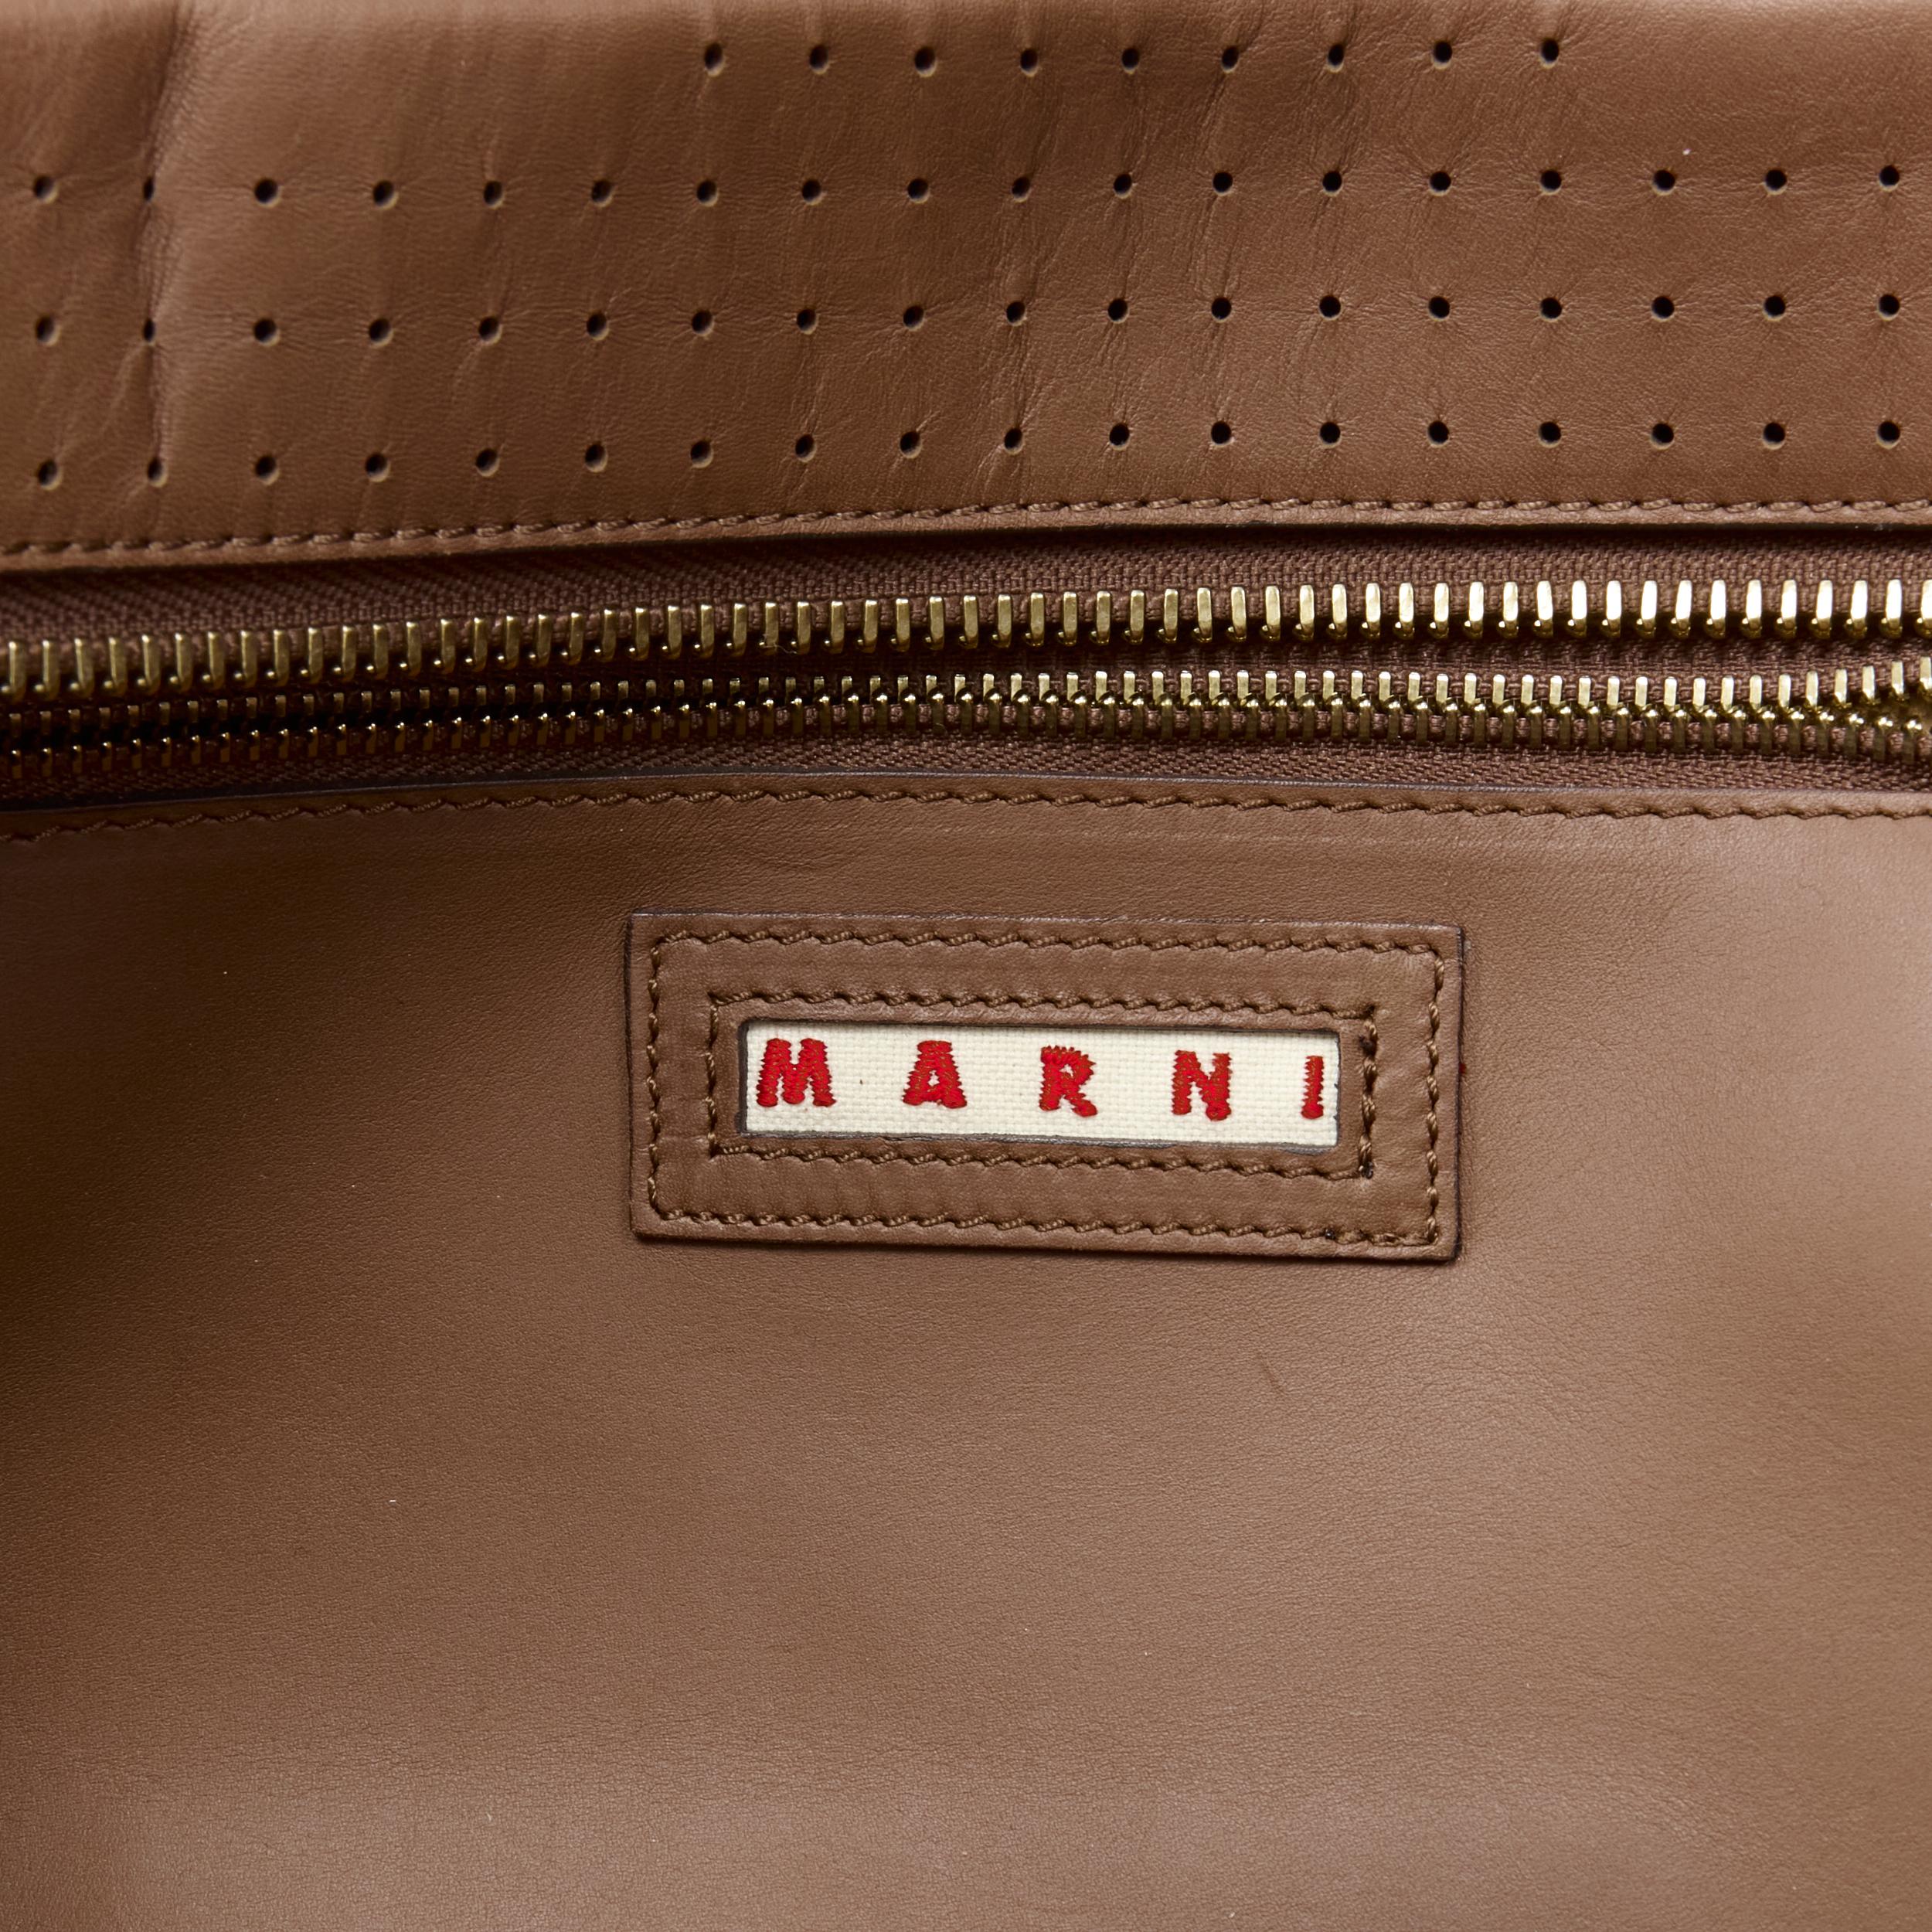 MARNI brown perforated leather black handle carryall satchel bag 4